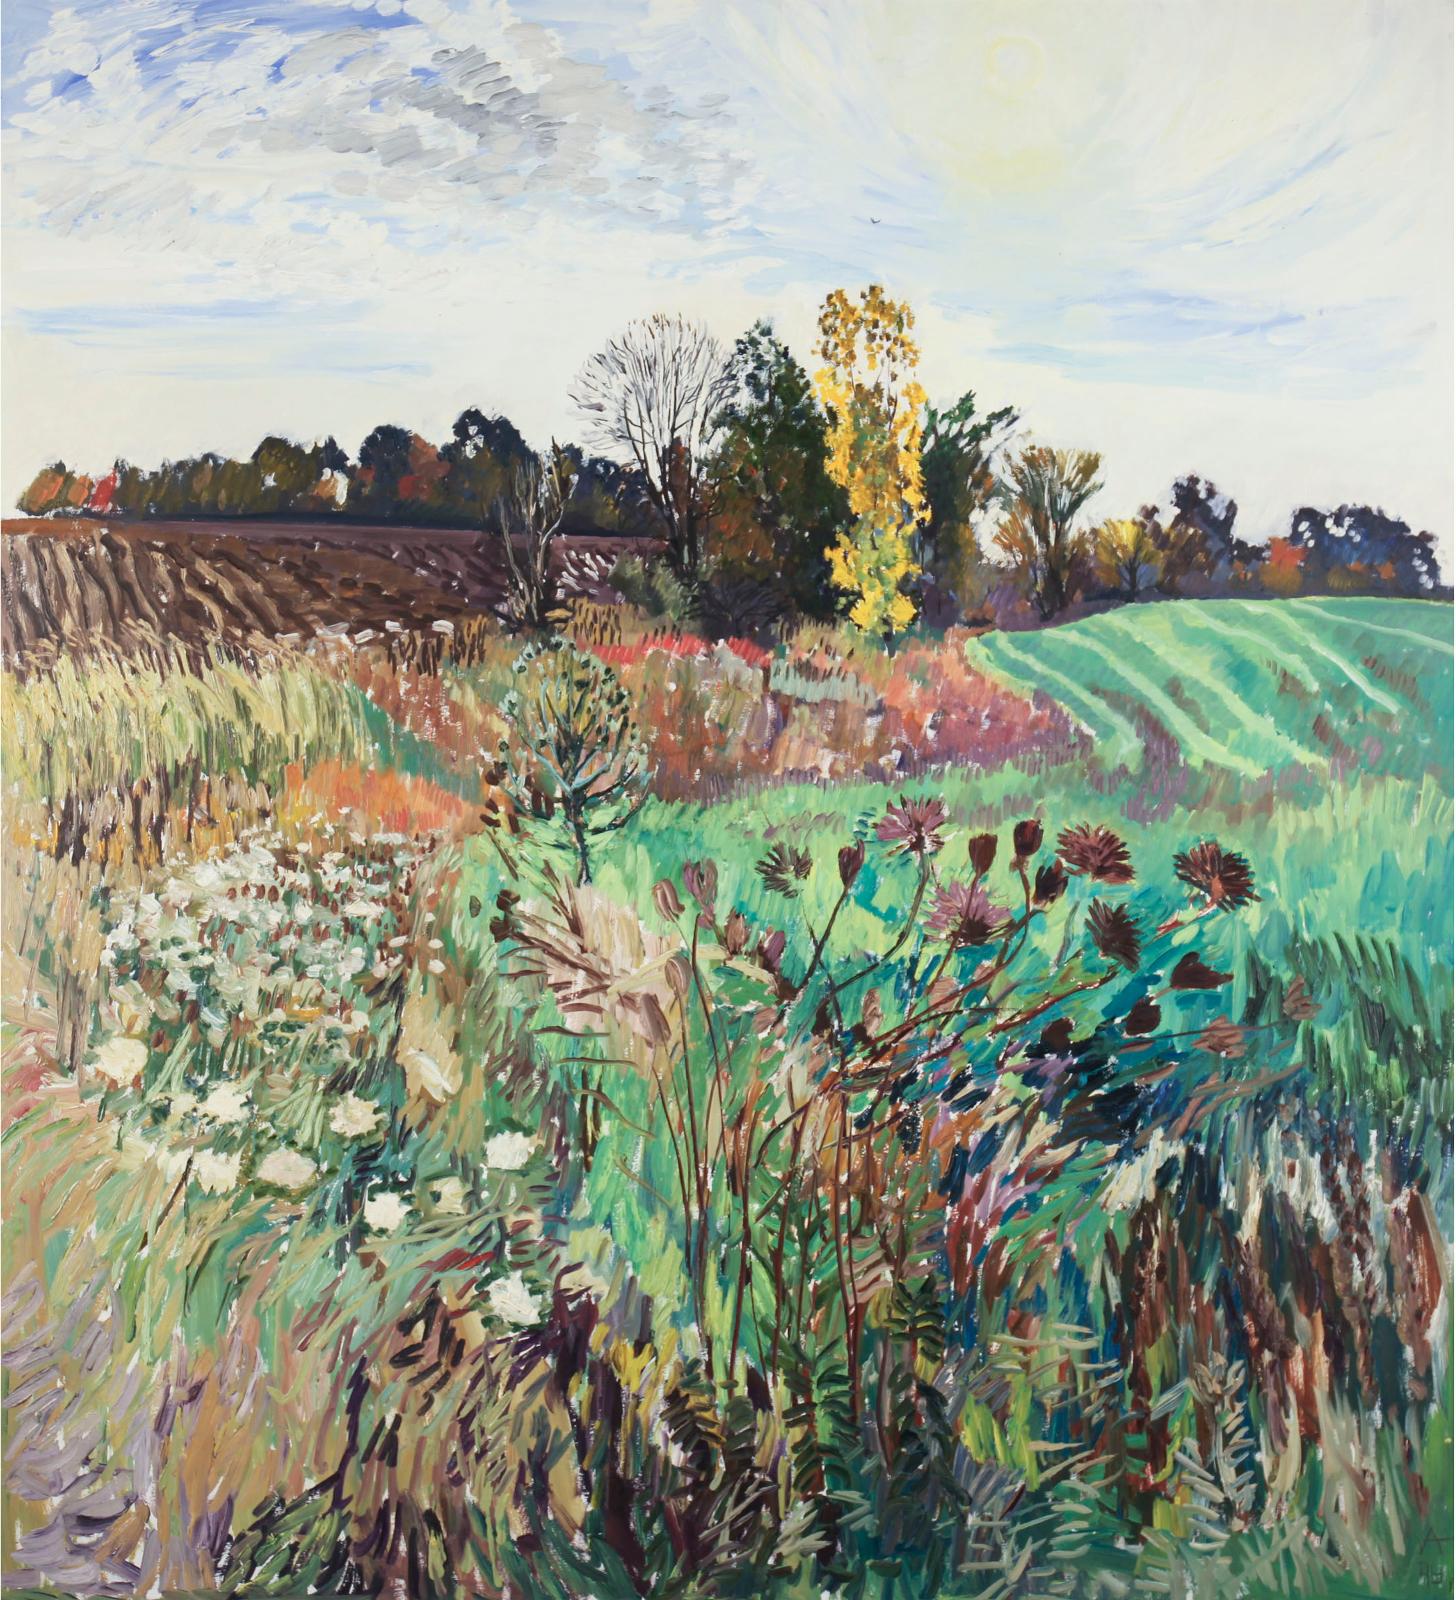 John David Anderson (1940) - Untitled (Landscape), 1996